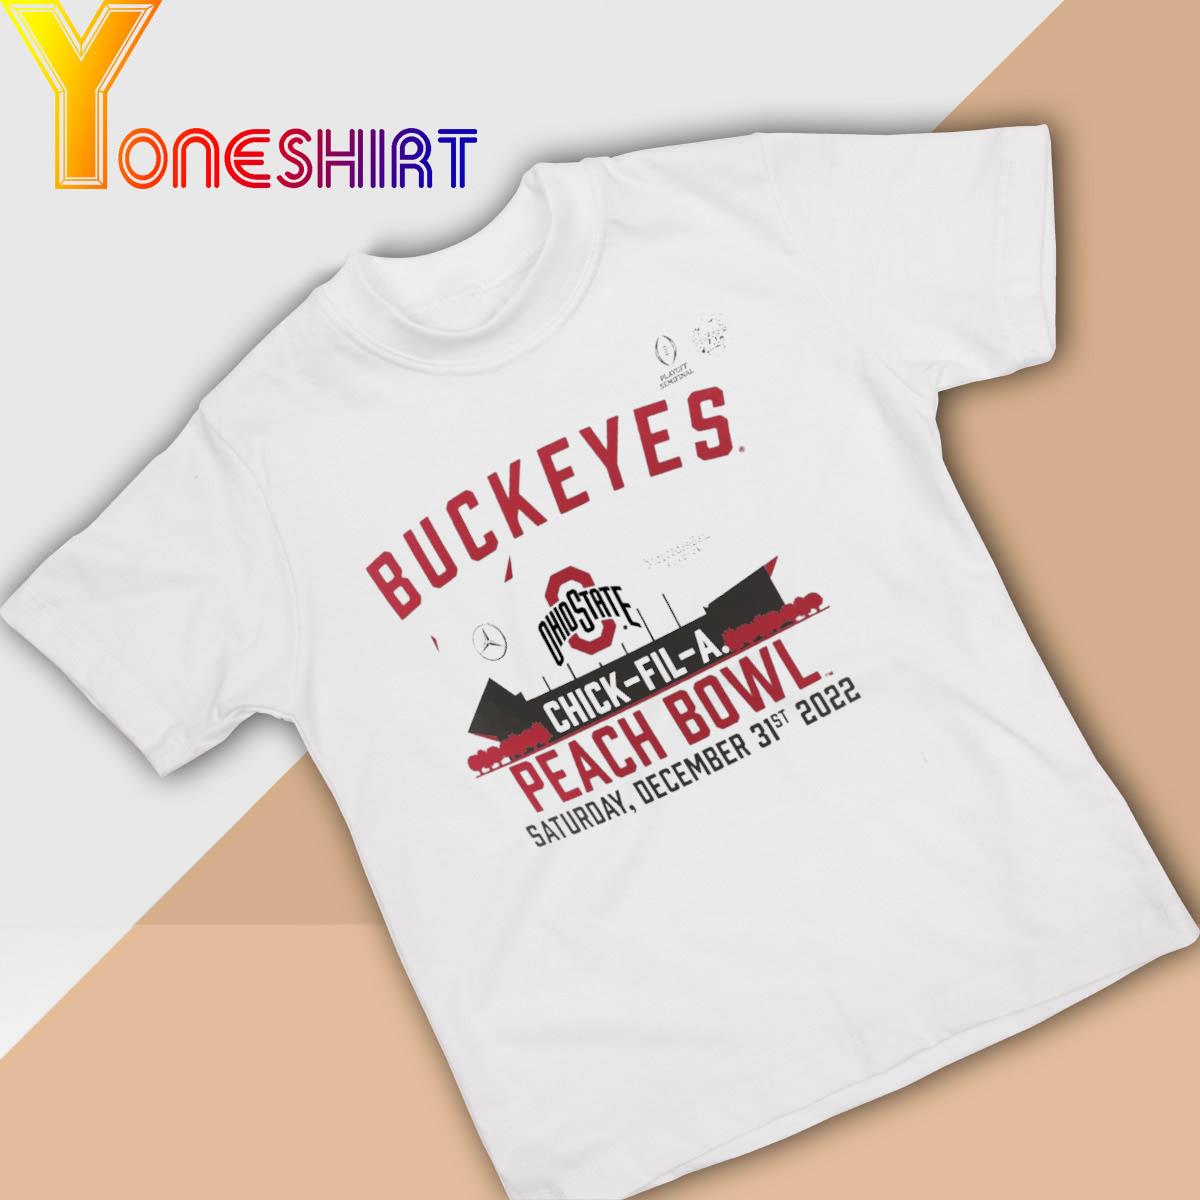 Ohio State Buckeyes Chick-Fil-A Peach Bowl 2022 shirt